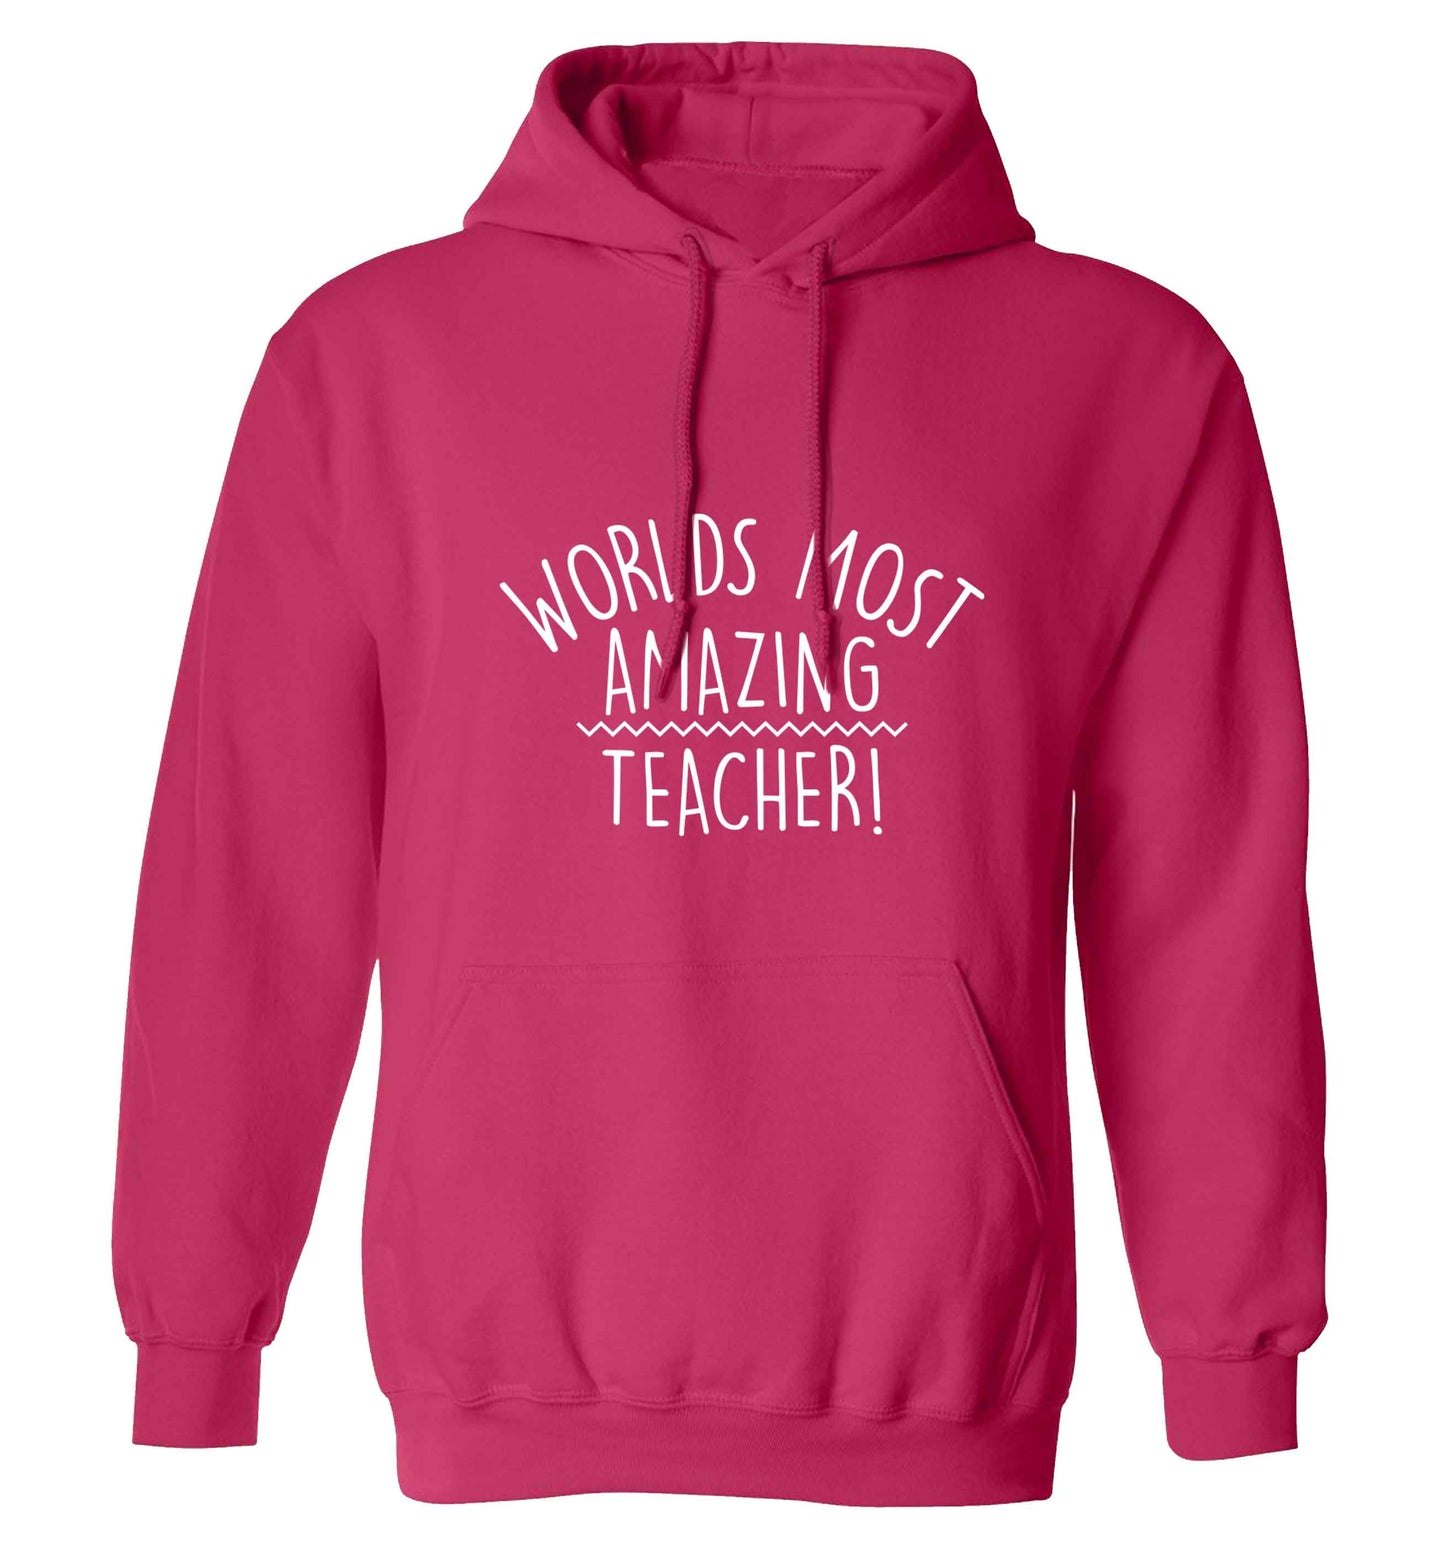 Worlds most amazing teacher adults unisex pink hoodie 2XL